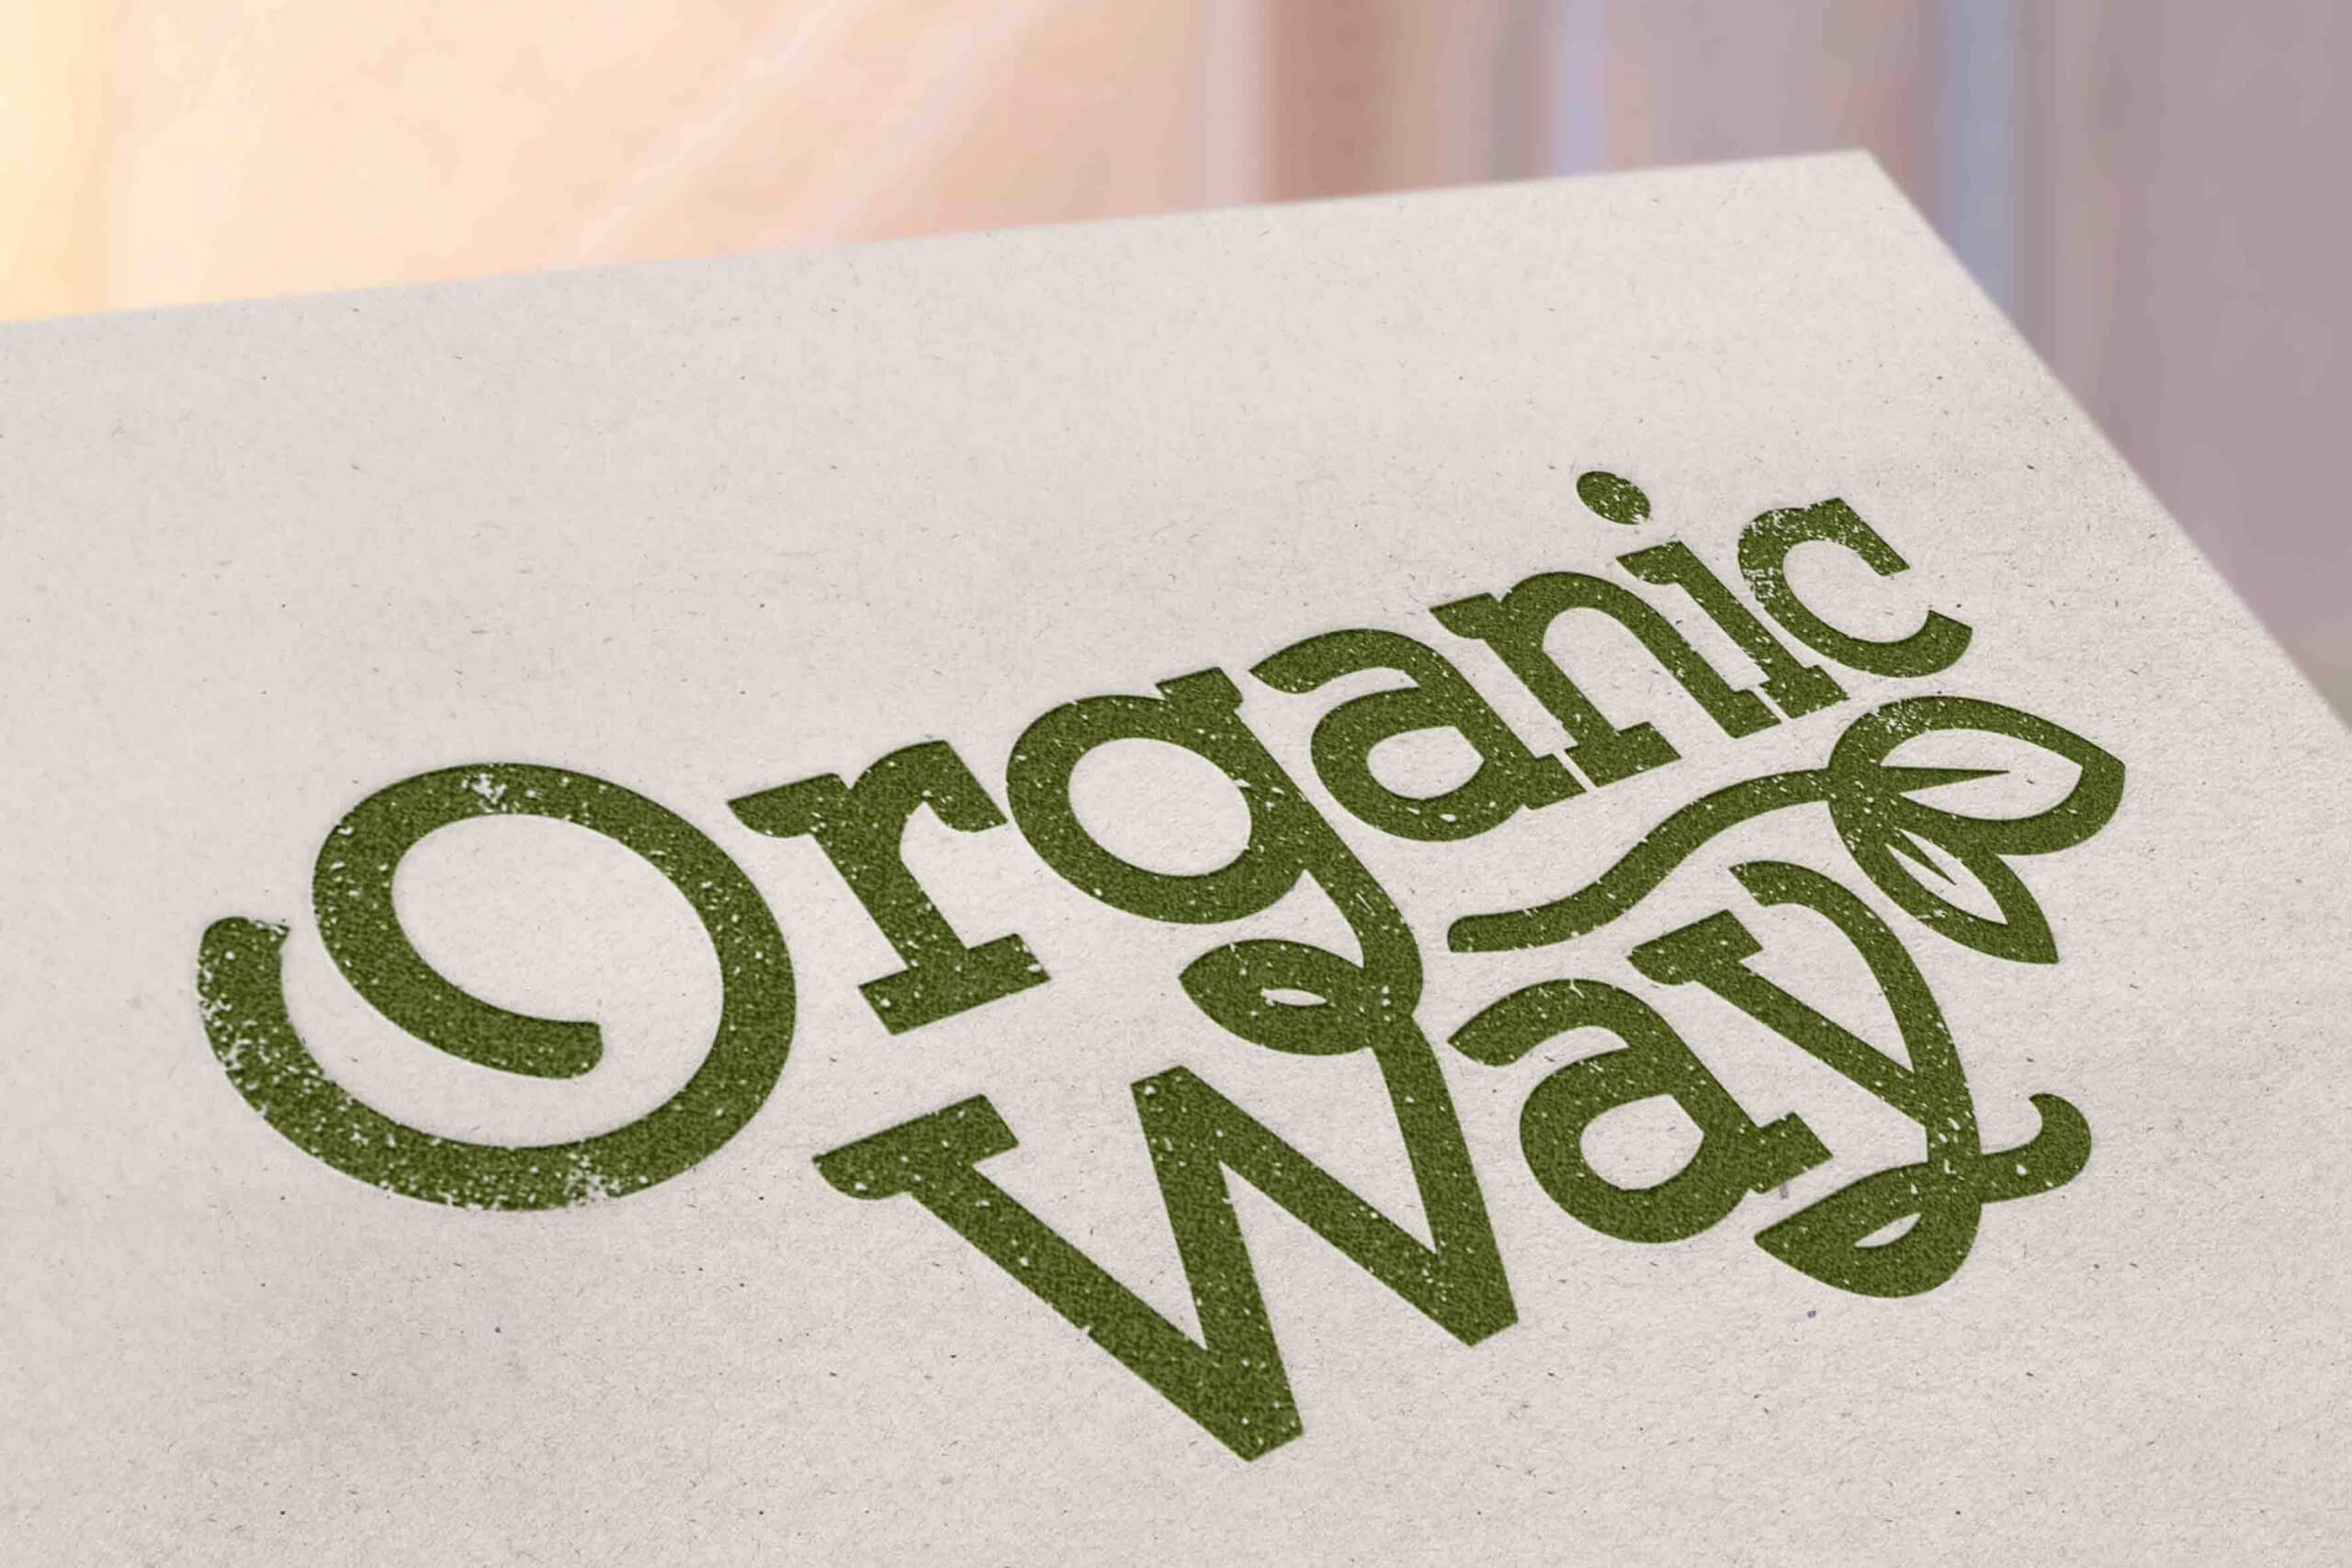 Organic Way Fertilizers Packaging Design